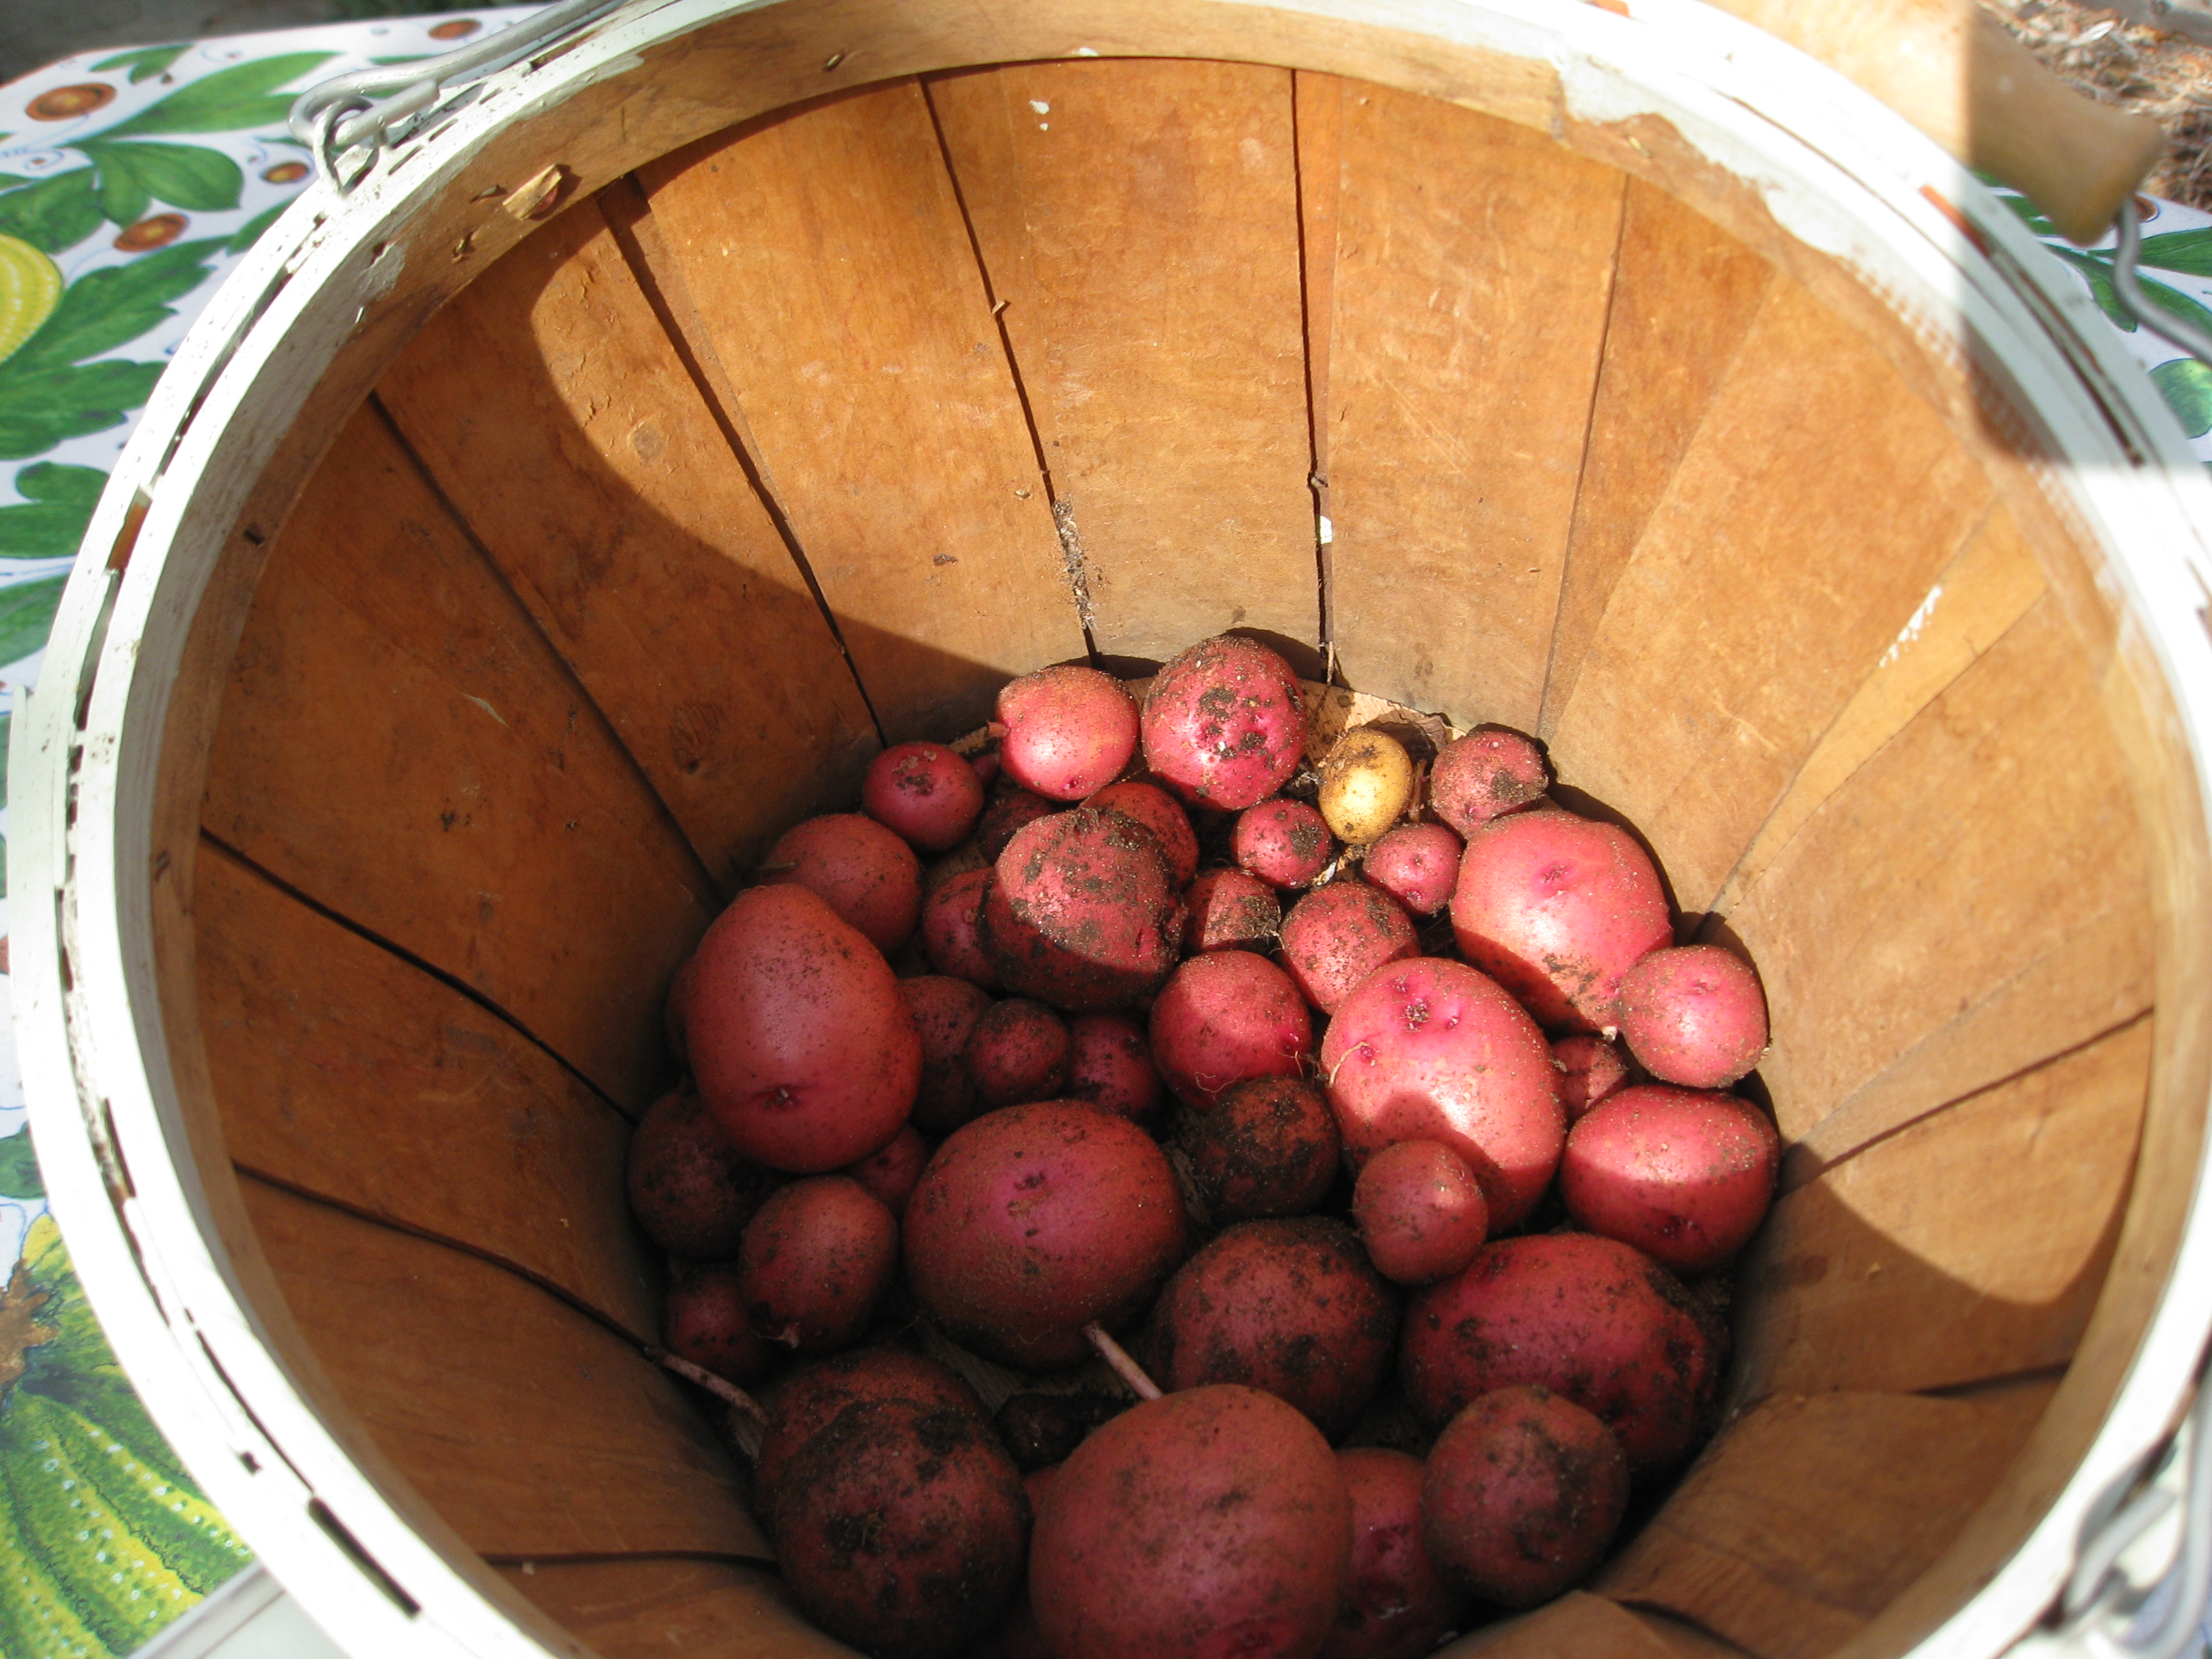 Sangre potatoes harvested in winter. Smaller than we'd like, but still tasty. 